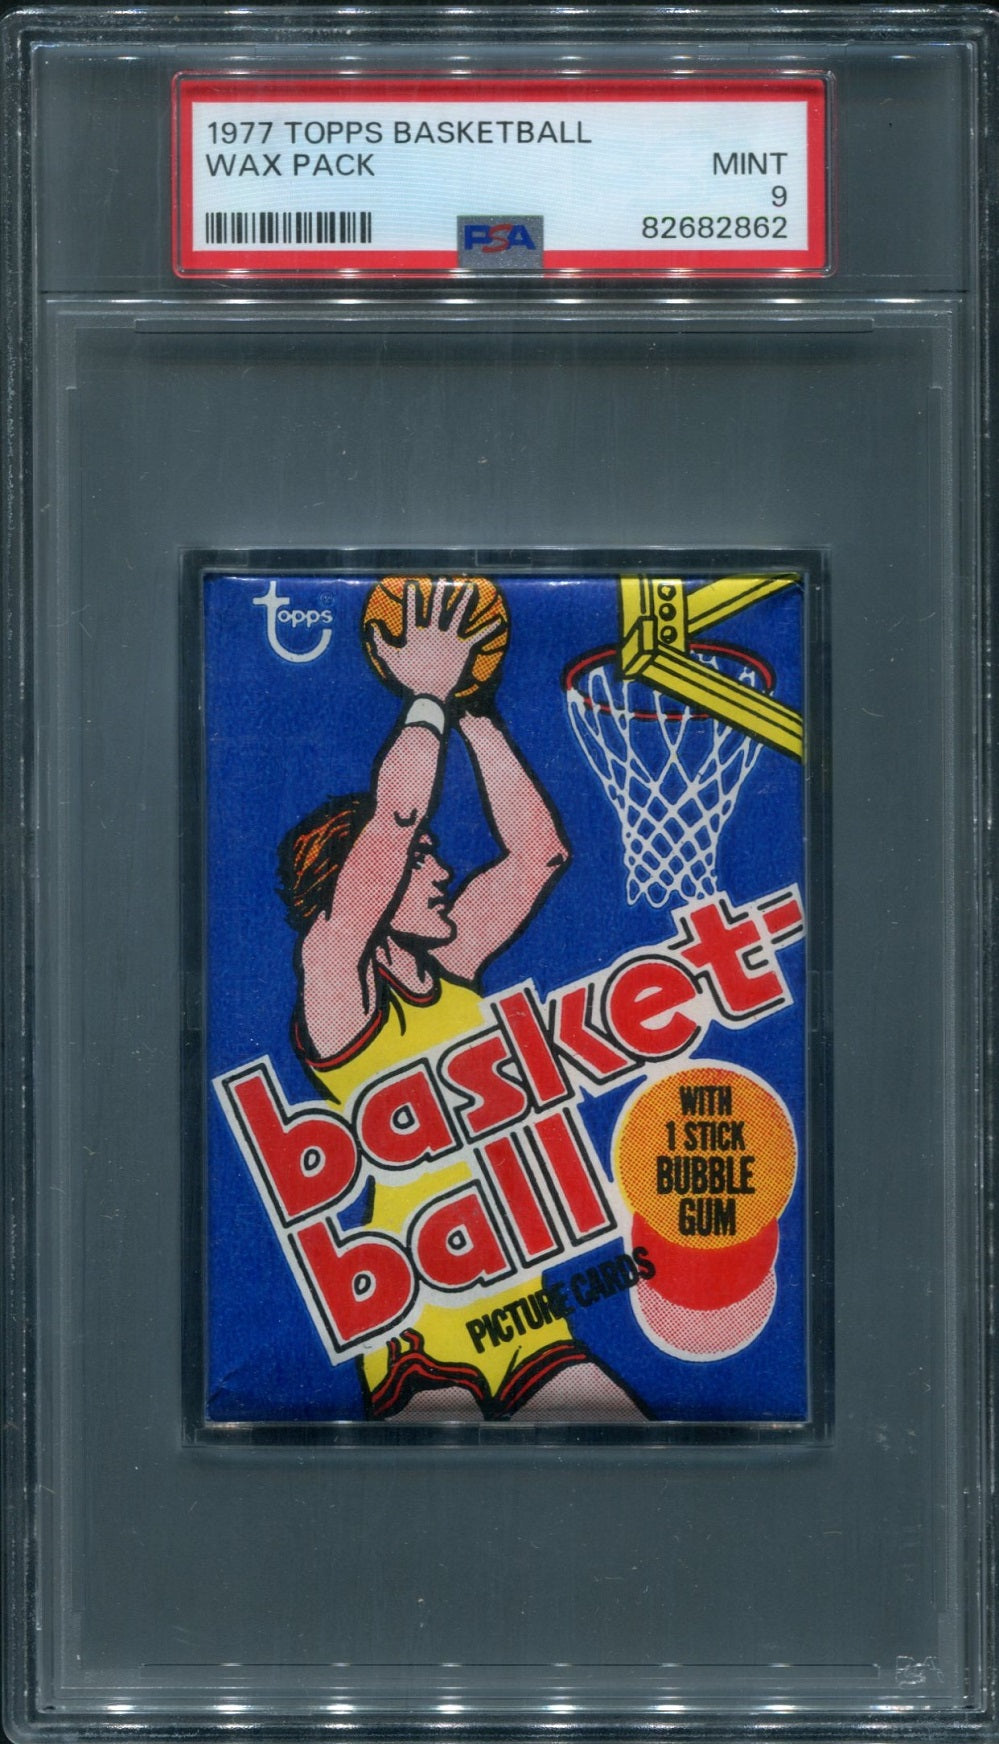 1977 1977/78 Topps Basketball Unopened Wax Pack PSA 9 *2862